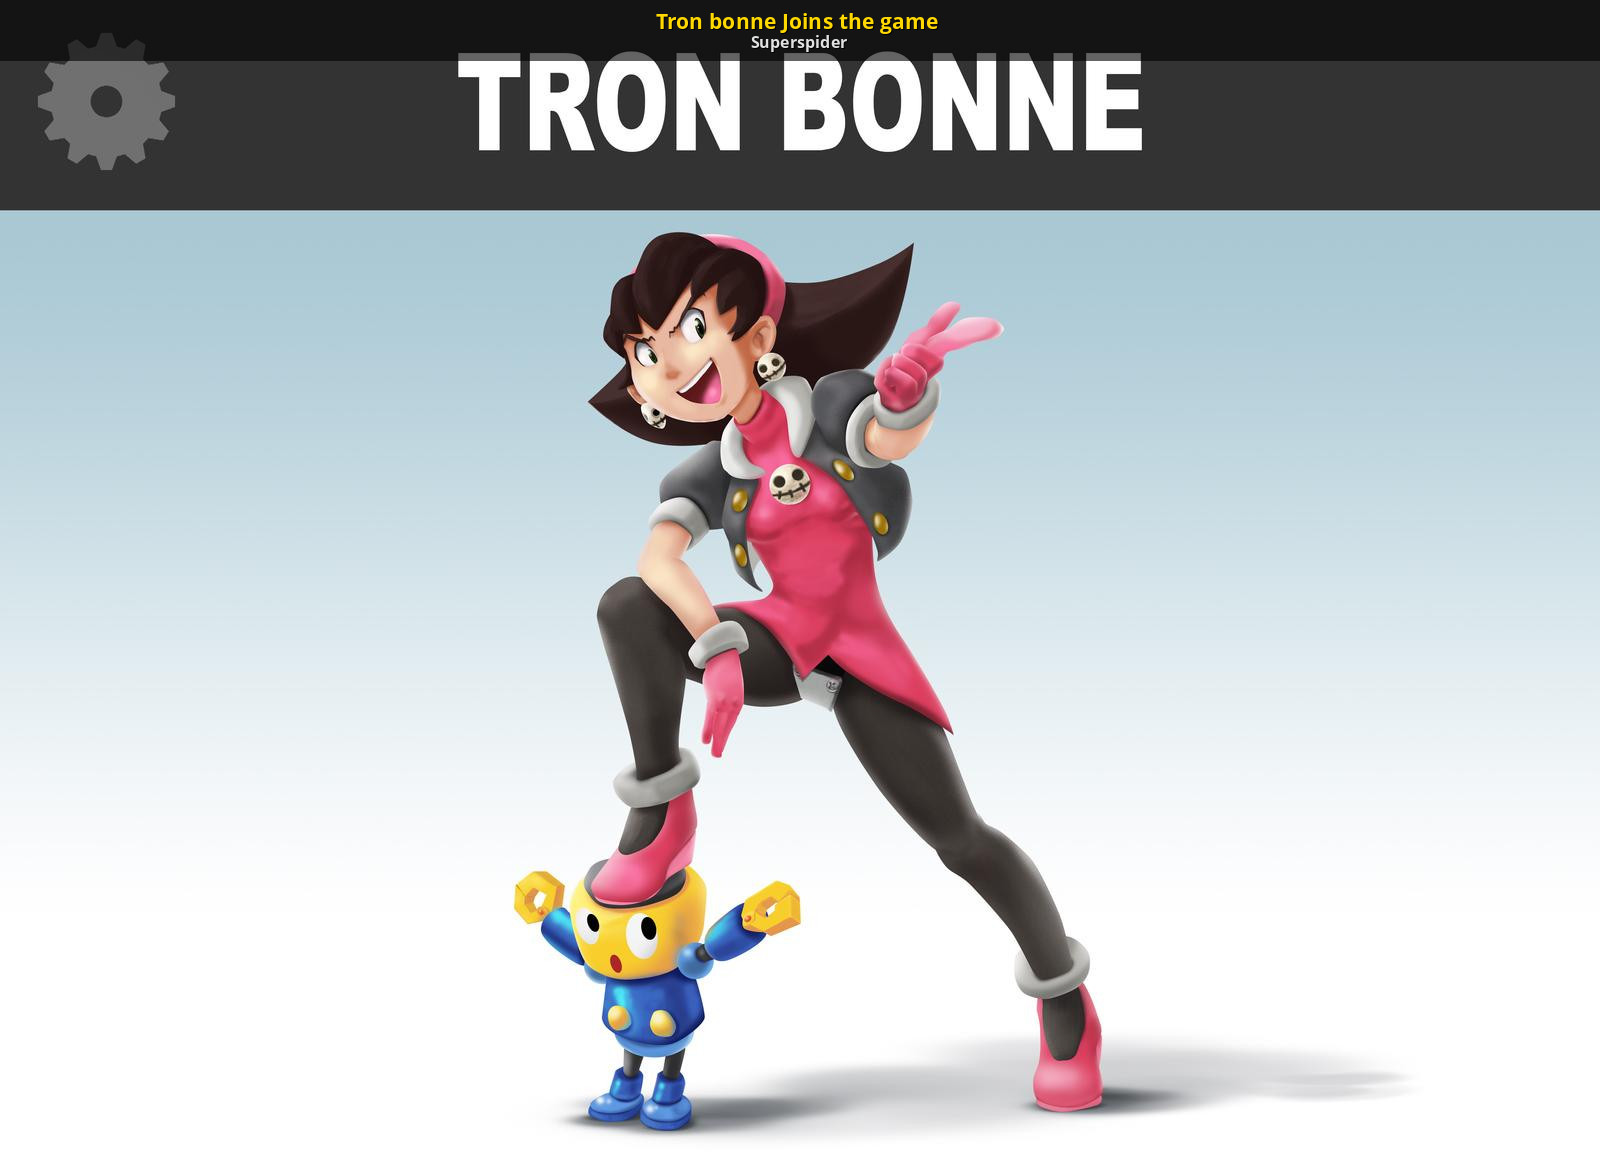 Tron bonne Joins the game Super Smash Bros. 